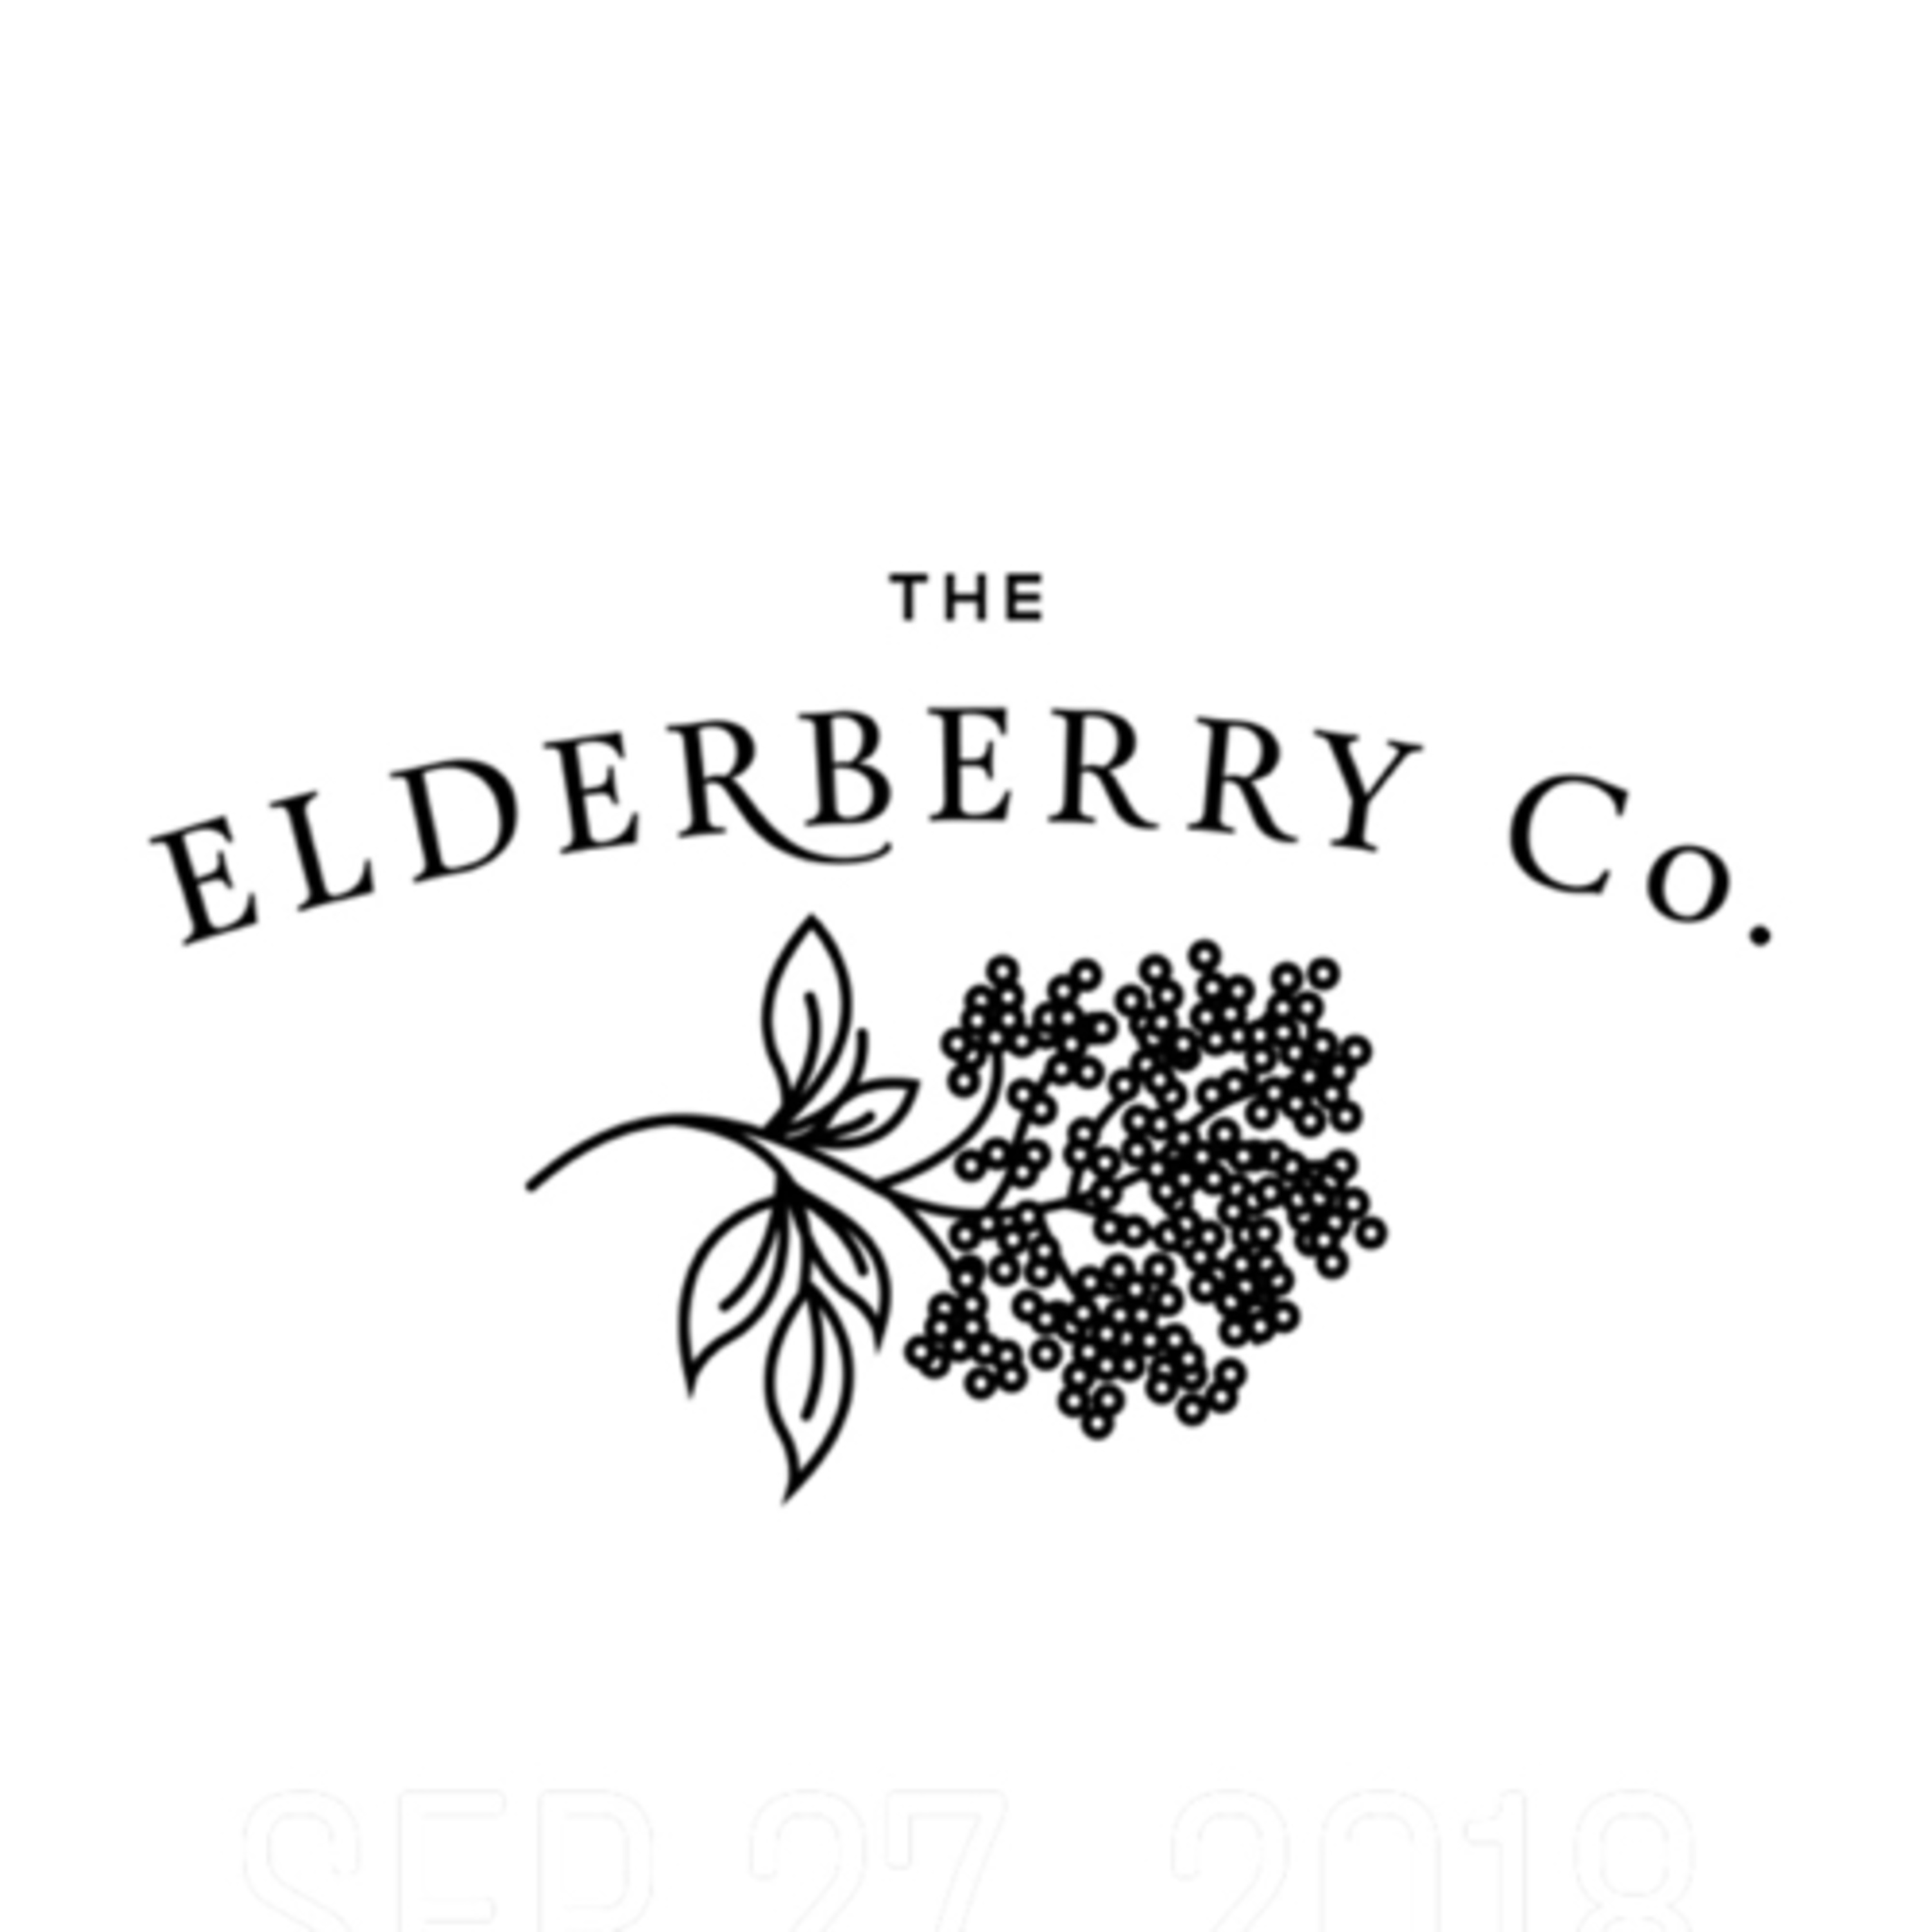 The Elderberry Co logo